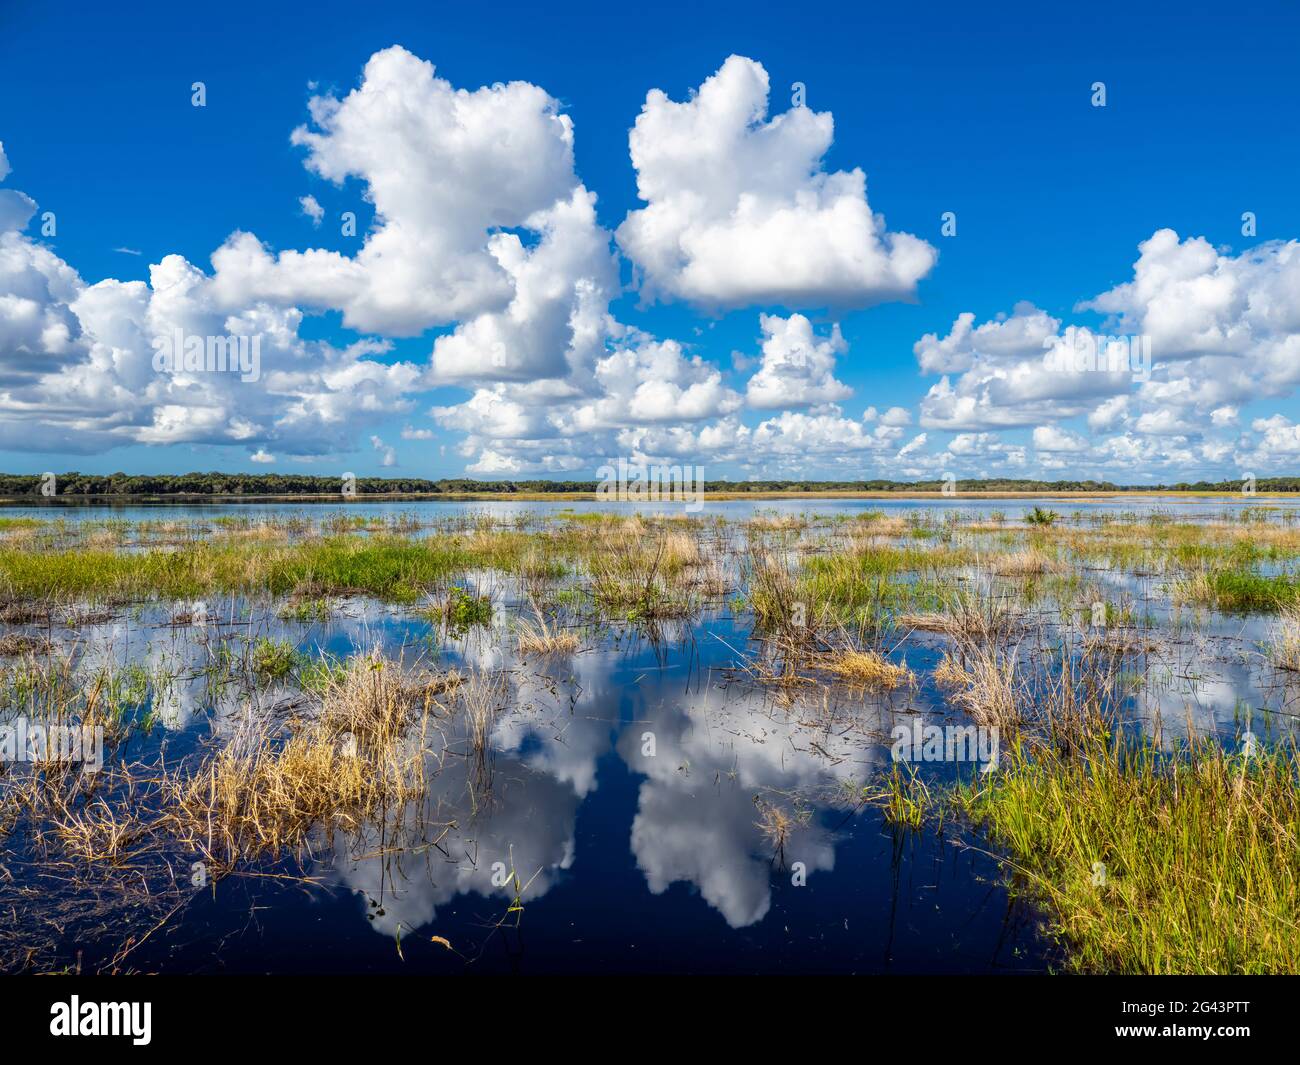 Paesaggio con erba e zone umide, Myakka River state Park, Sarasota, Florida, Stati Uniti Foto Stock